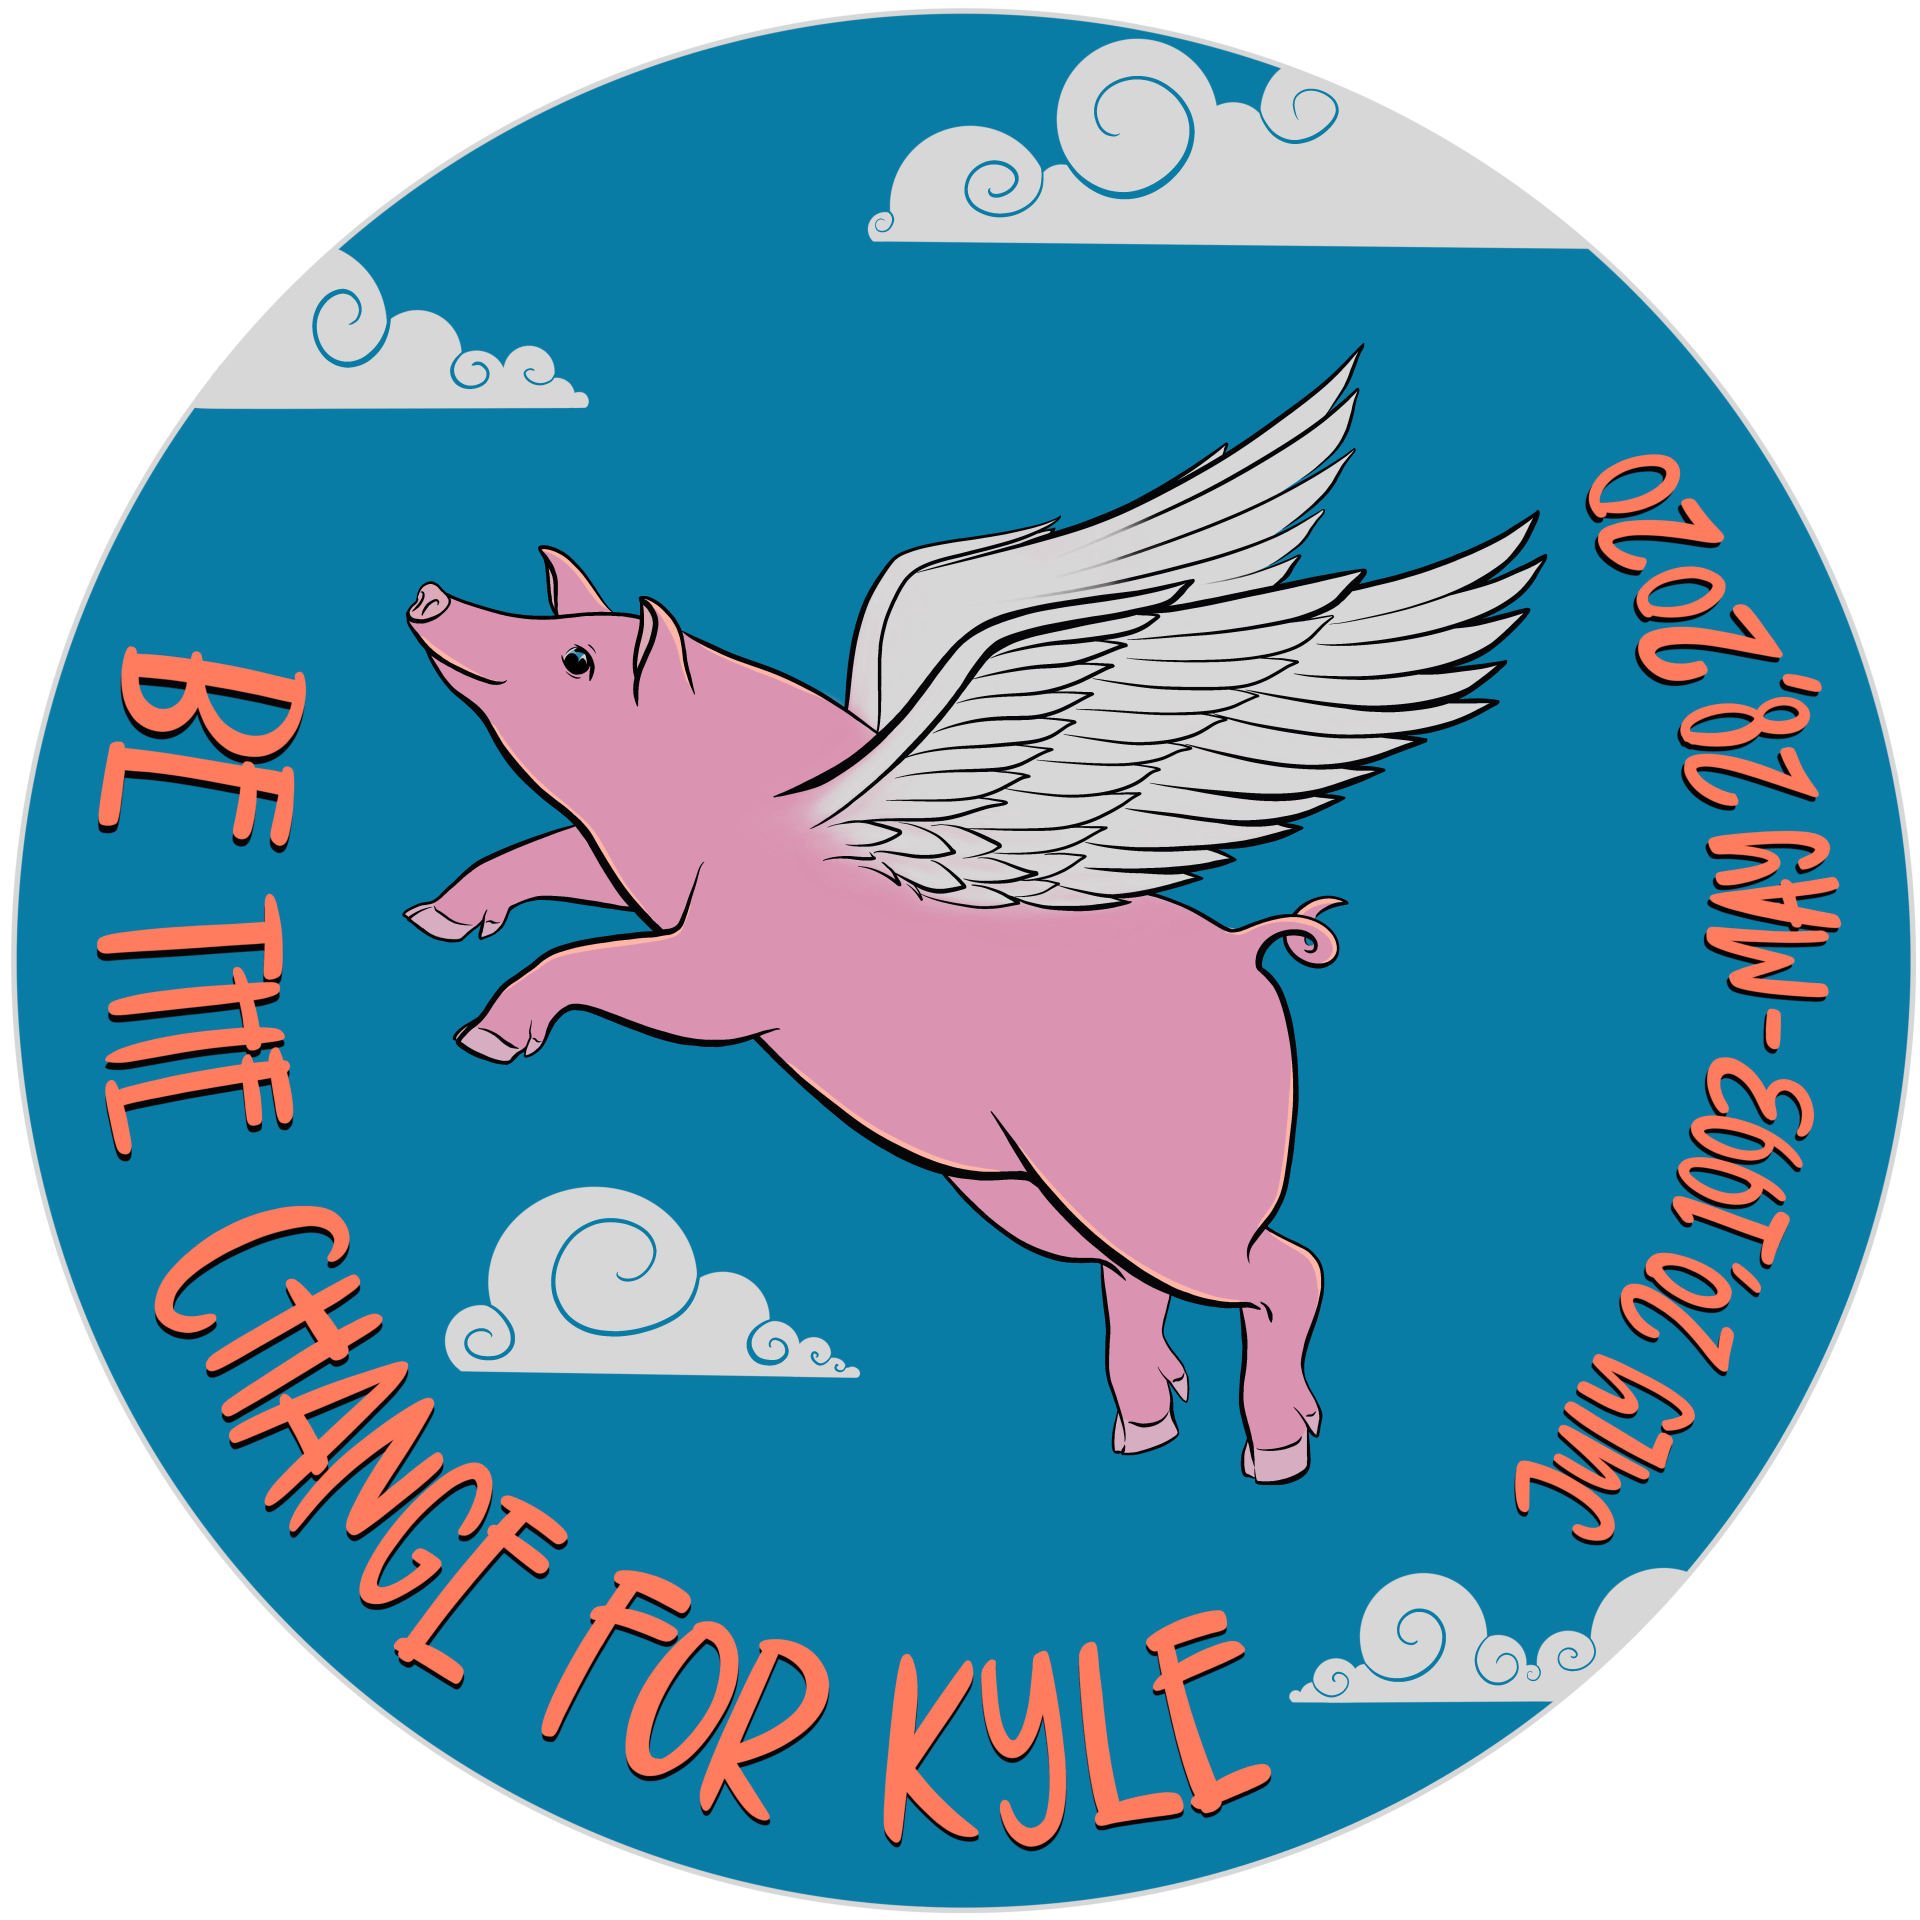 Flying pig logo